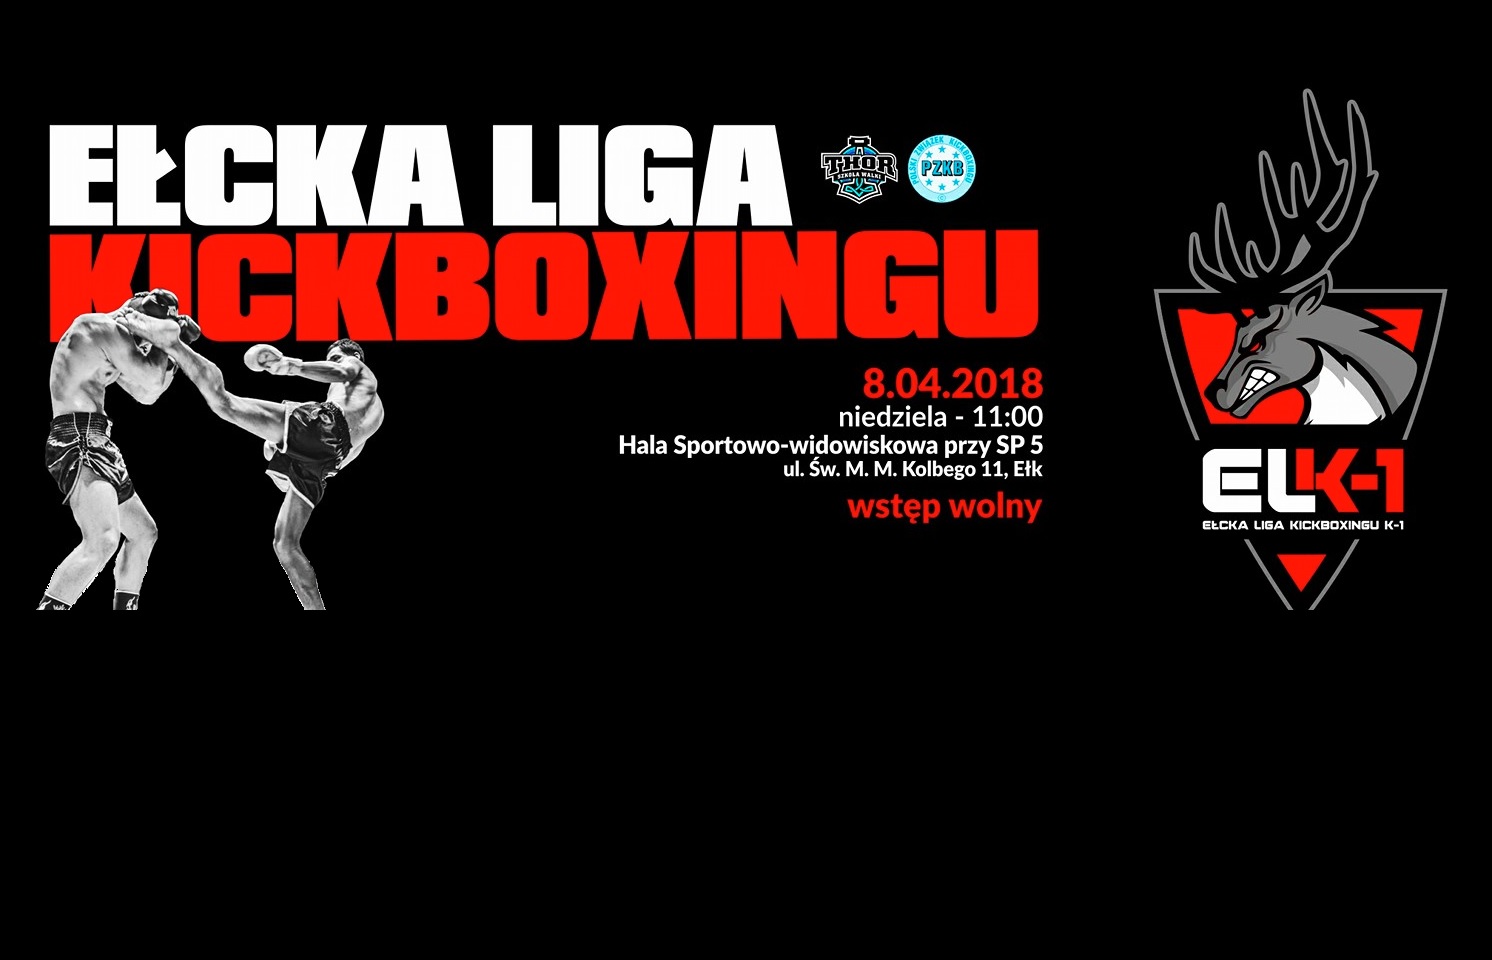 Ełk Kickboxing League